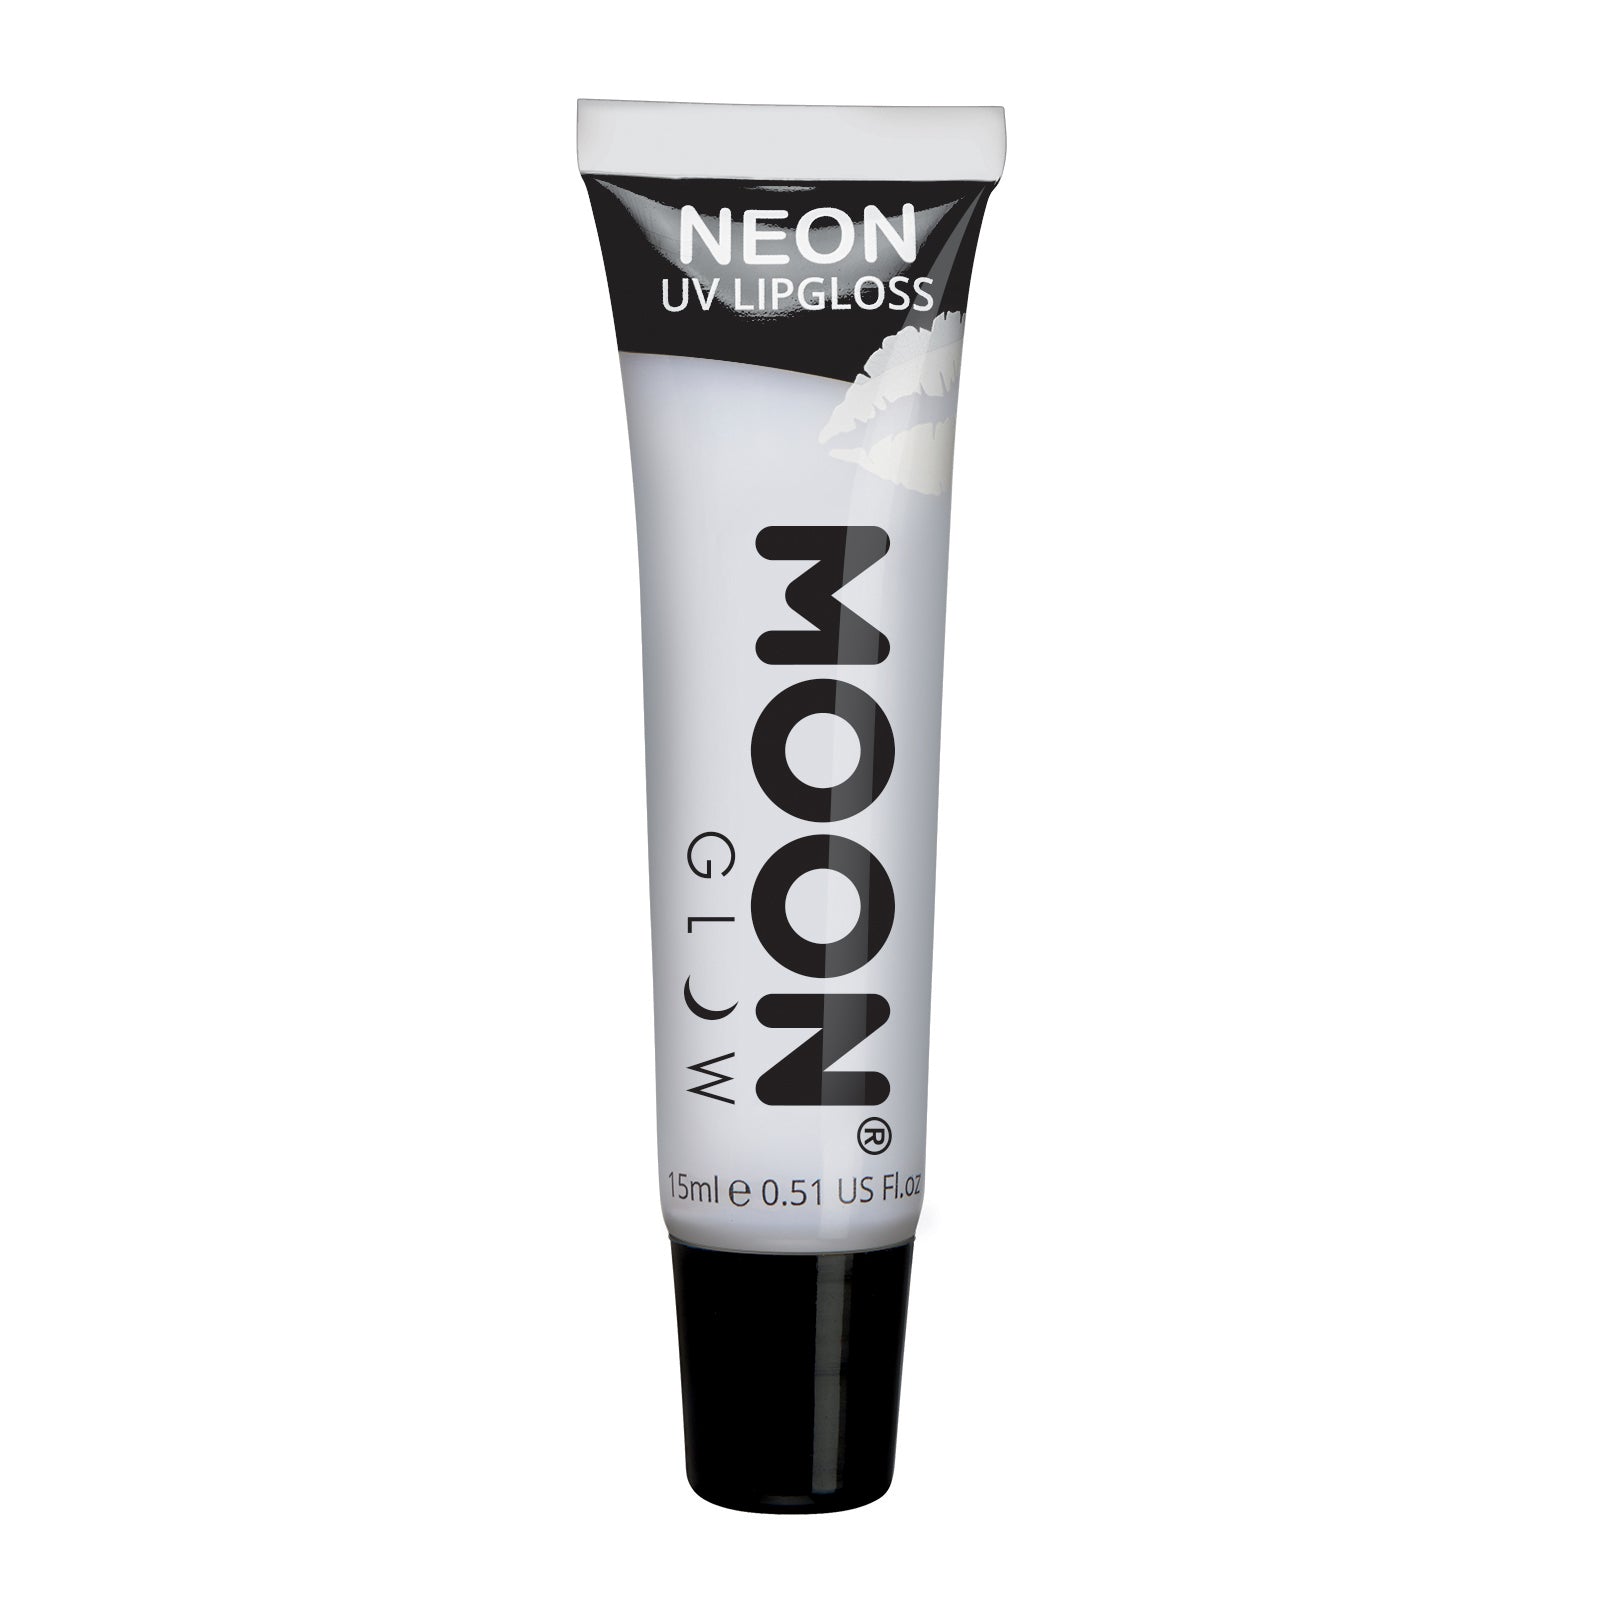 White Vanilla - Neon UV Glow Blacklight Lip Gloss, 15mL. Cosmetically certified, FDA & Health Canada compliant, cruelty free and vegan.